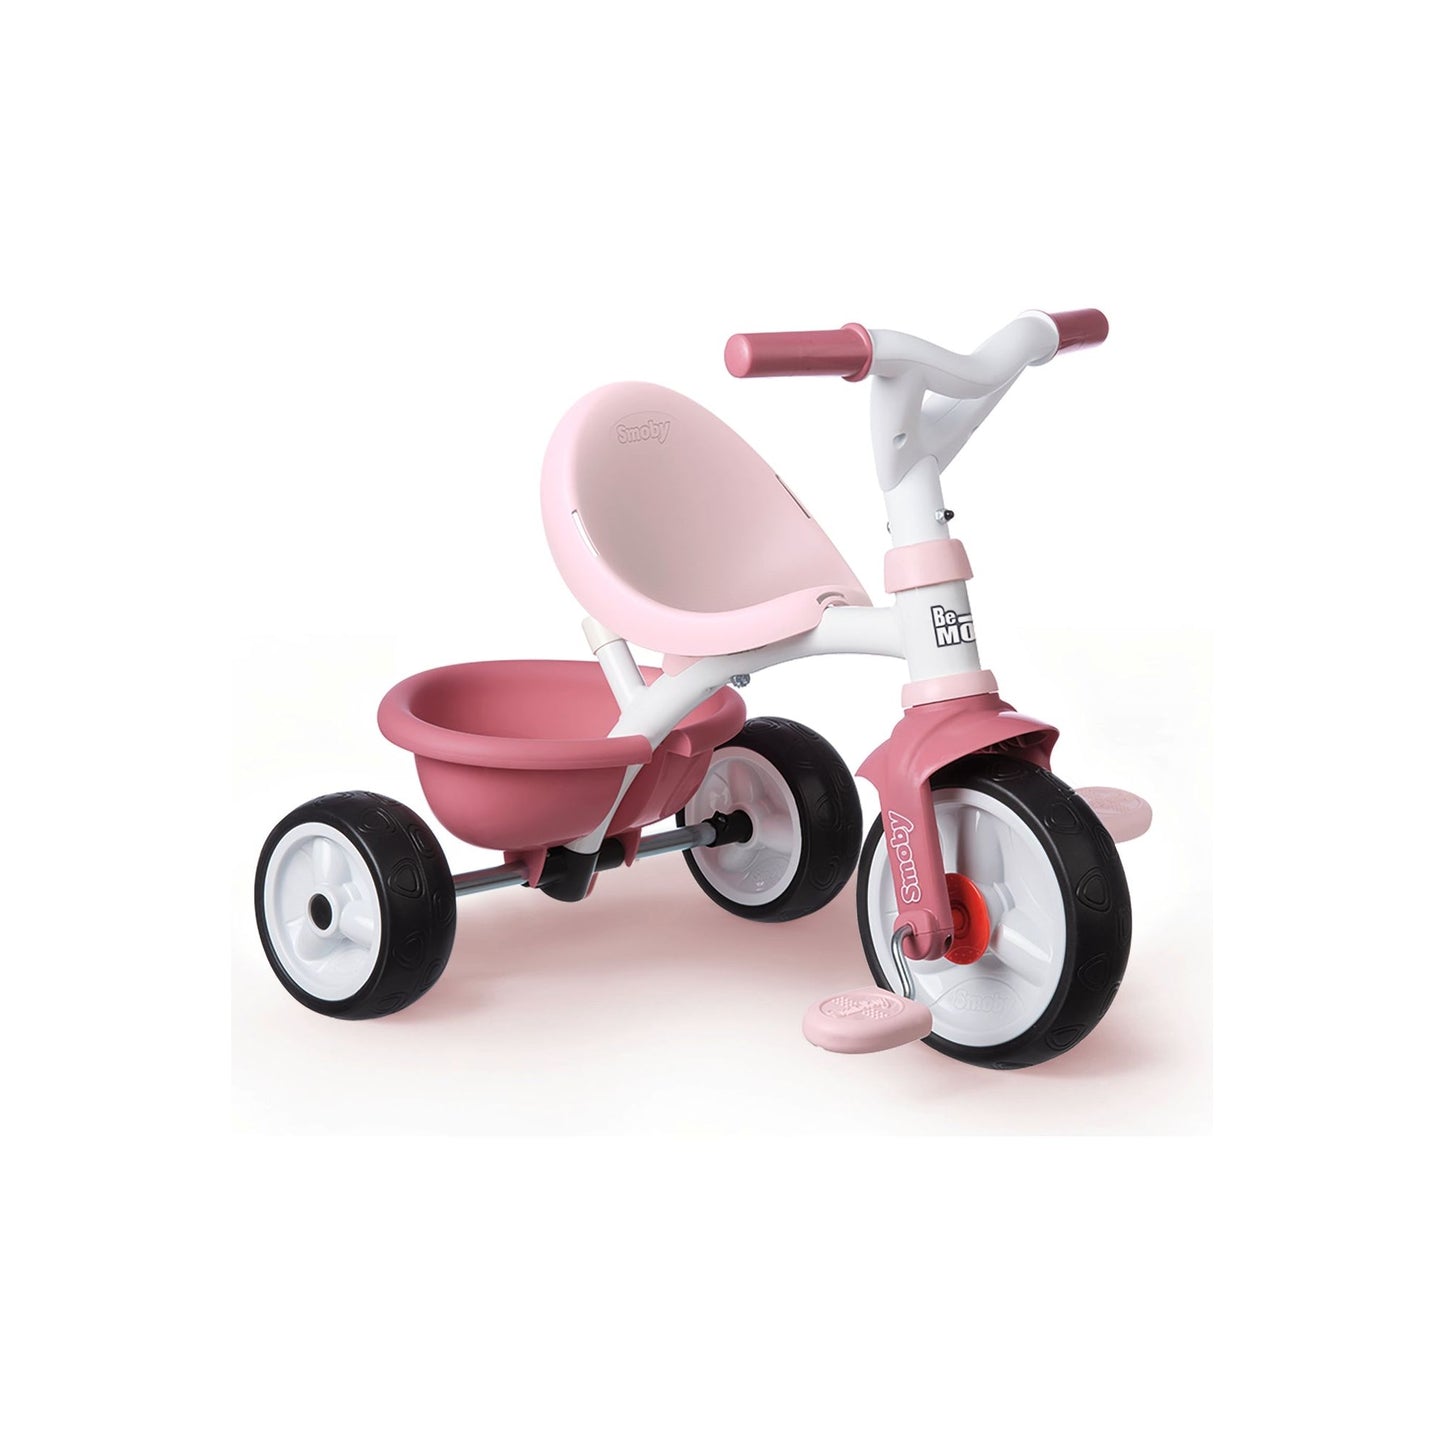 Smoby Baby Balade Trike - 10 months plus - Pink